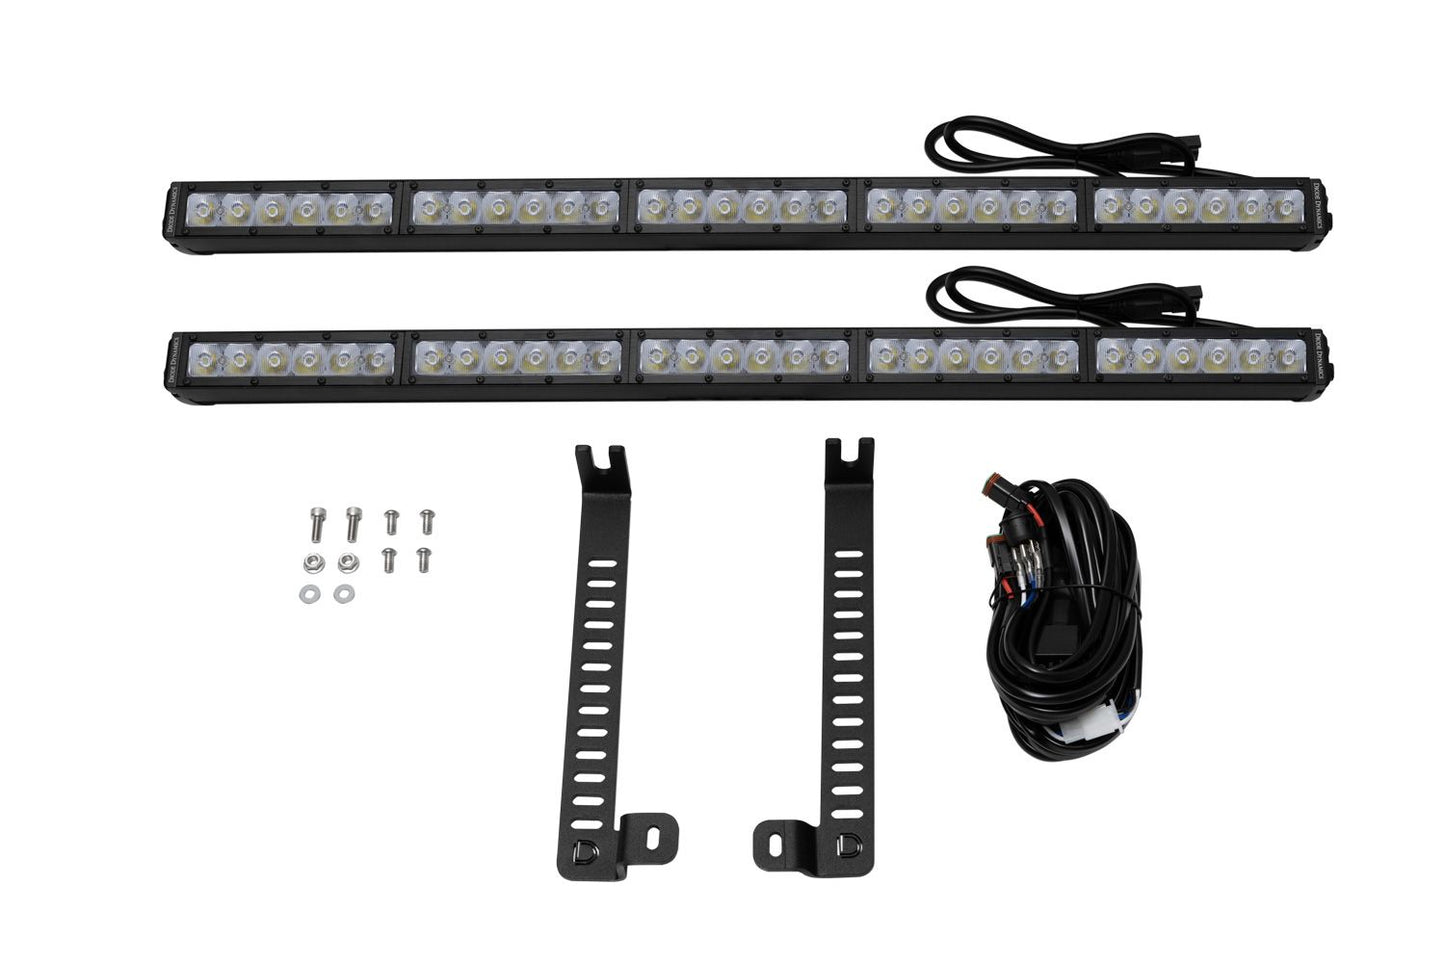 Diode Dynamics Grille-Mount LED Light Bar System: Toyota 4Runner (2014-2023) SS30 30"